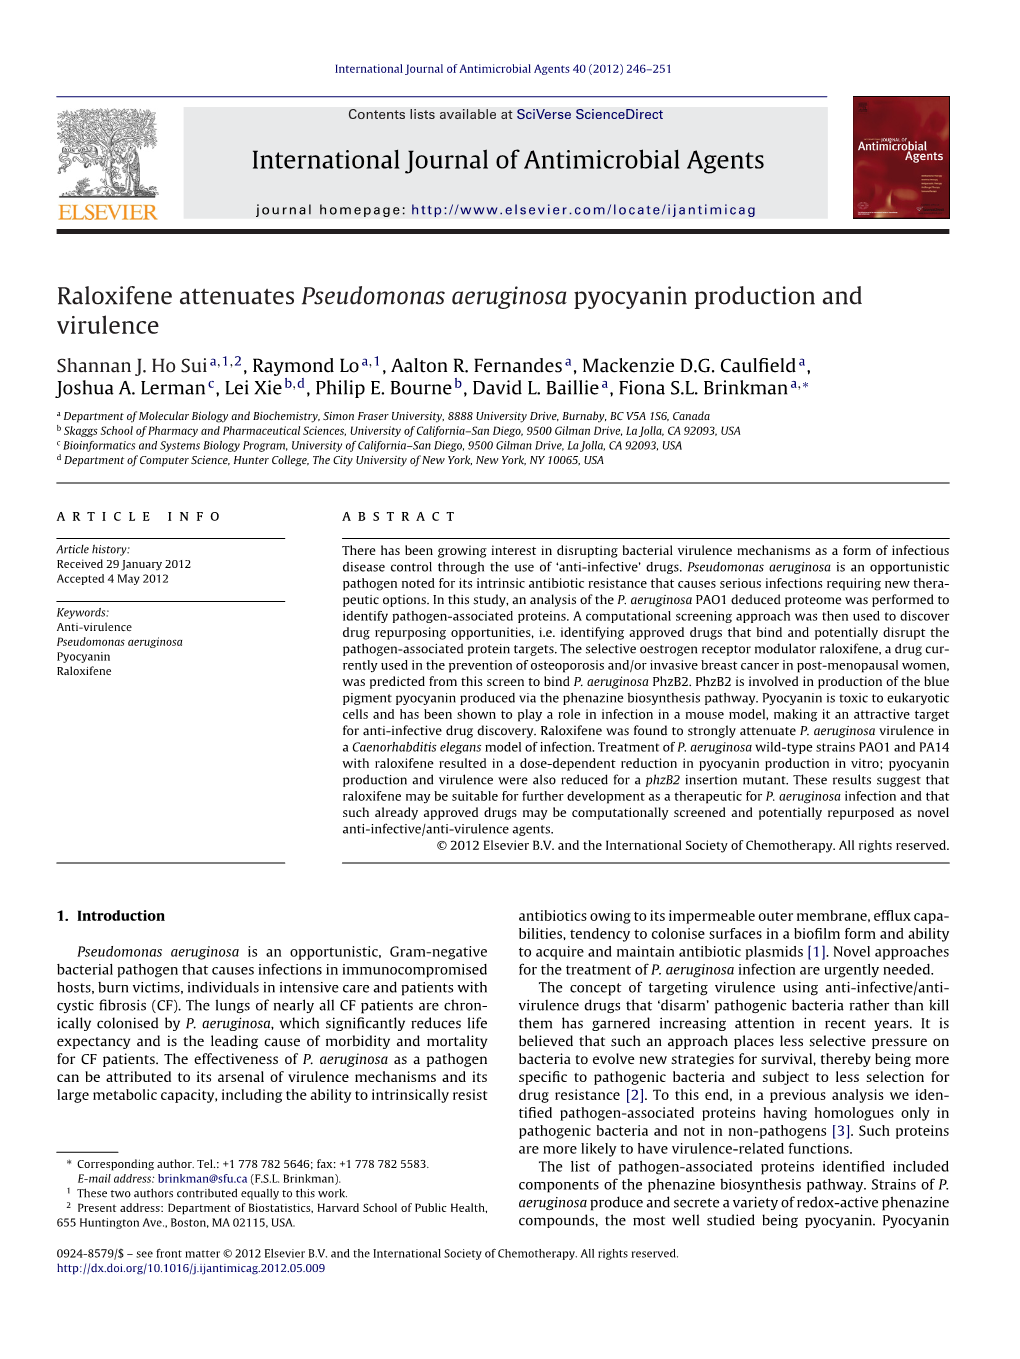 Raloxifene Attenuates Pseudomonas Aeruginosa Pyocyanin Production and Virulence